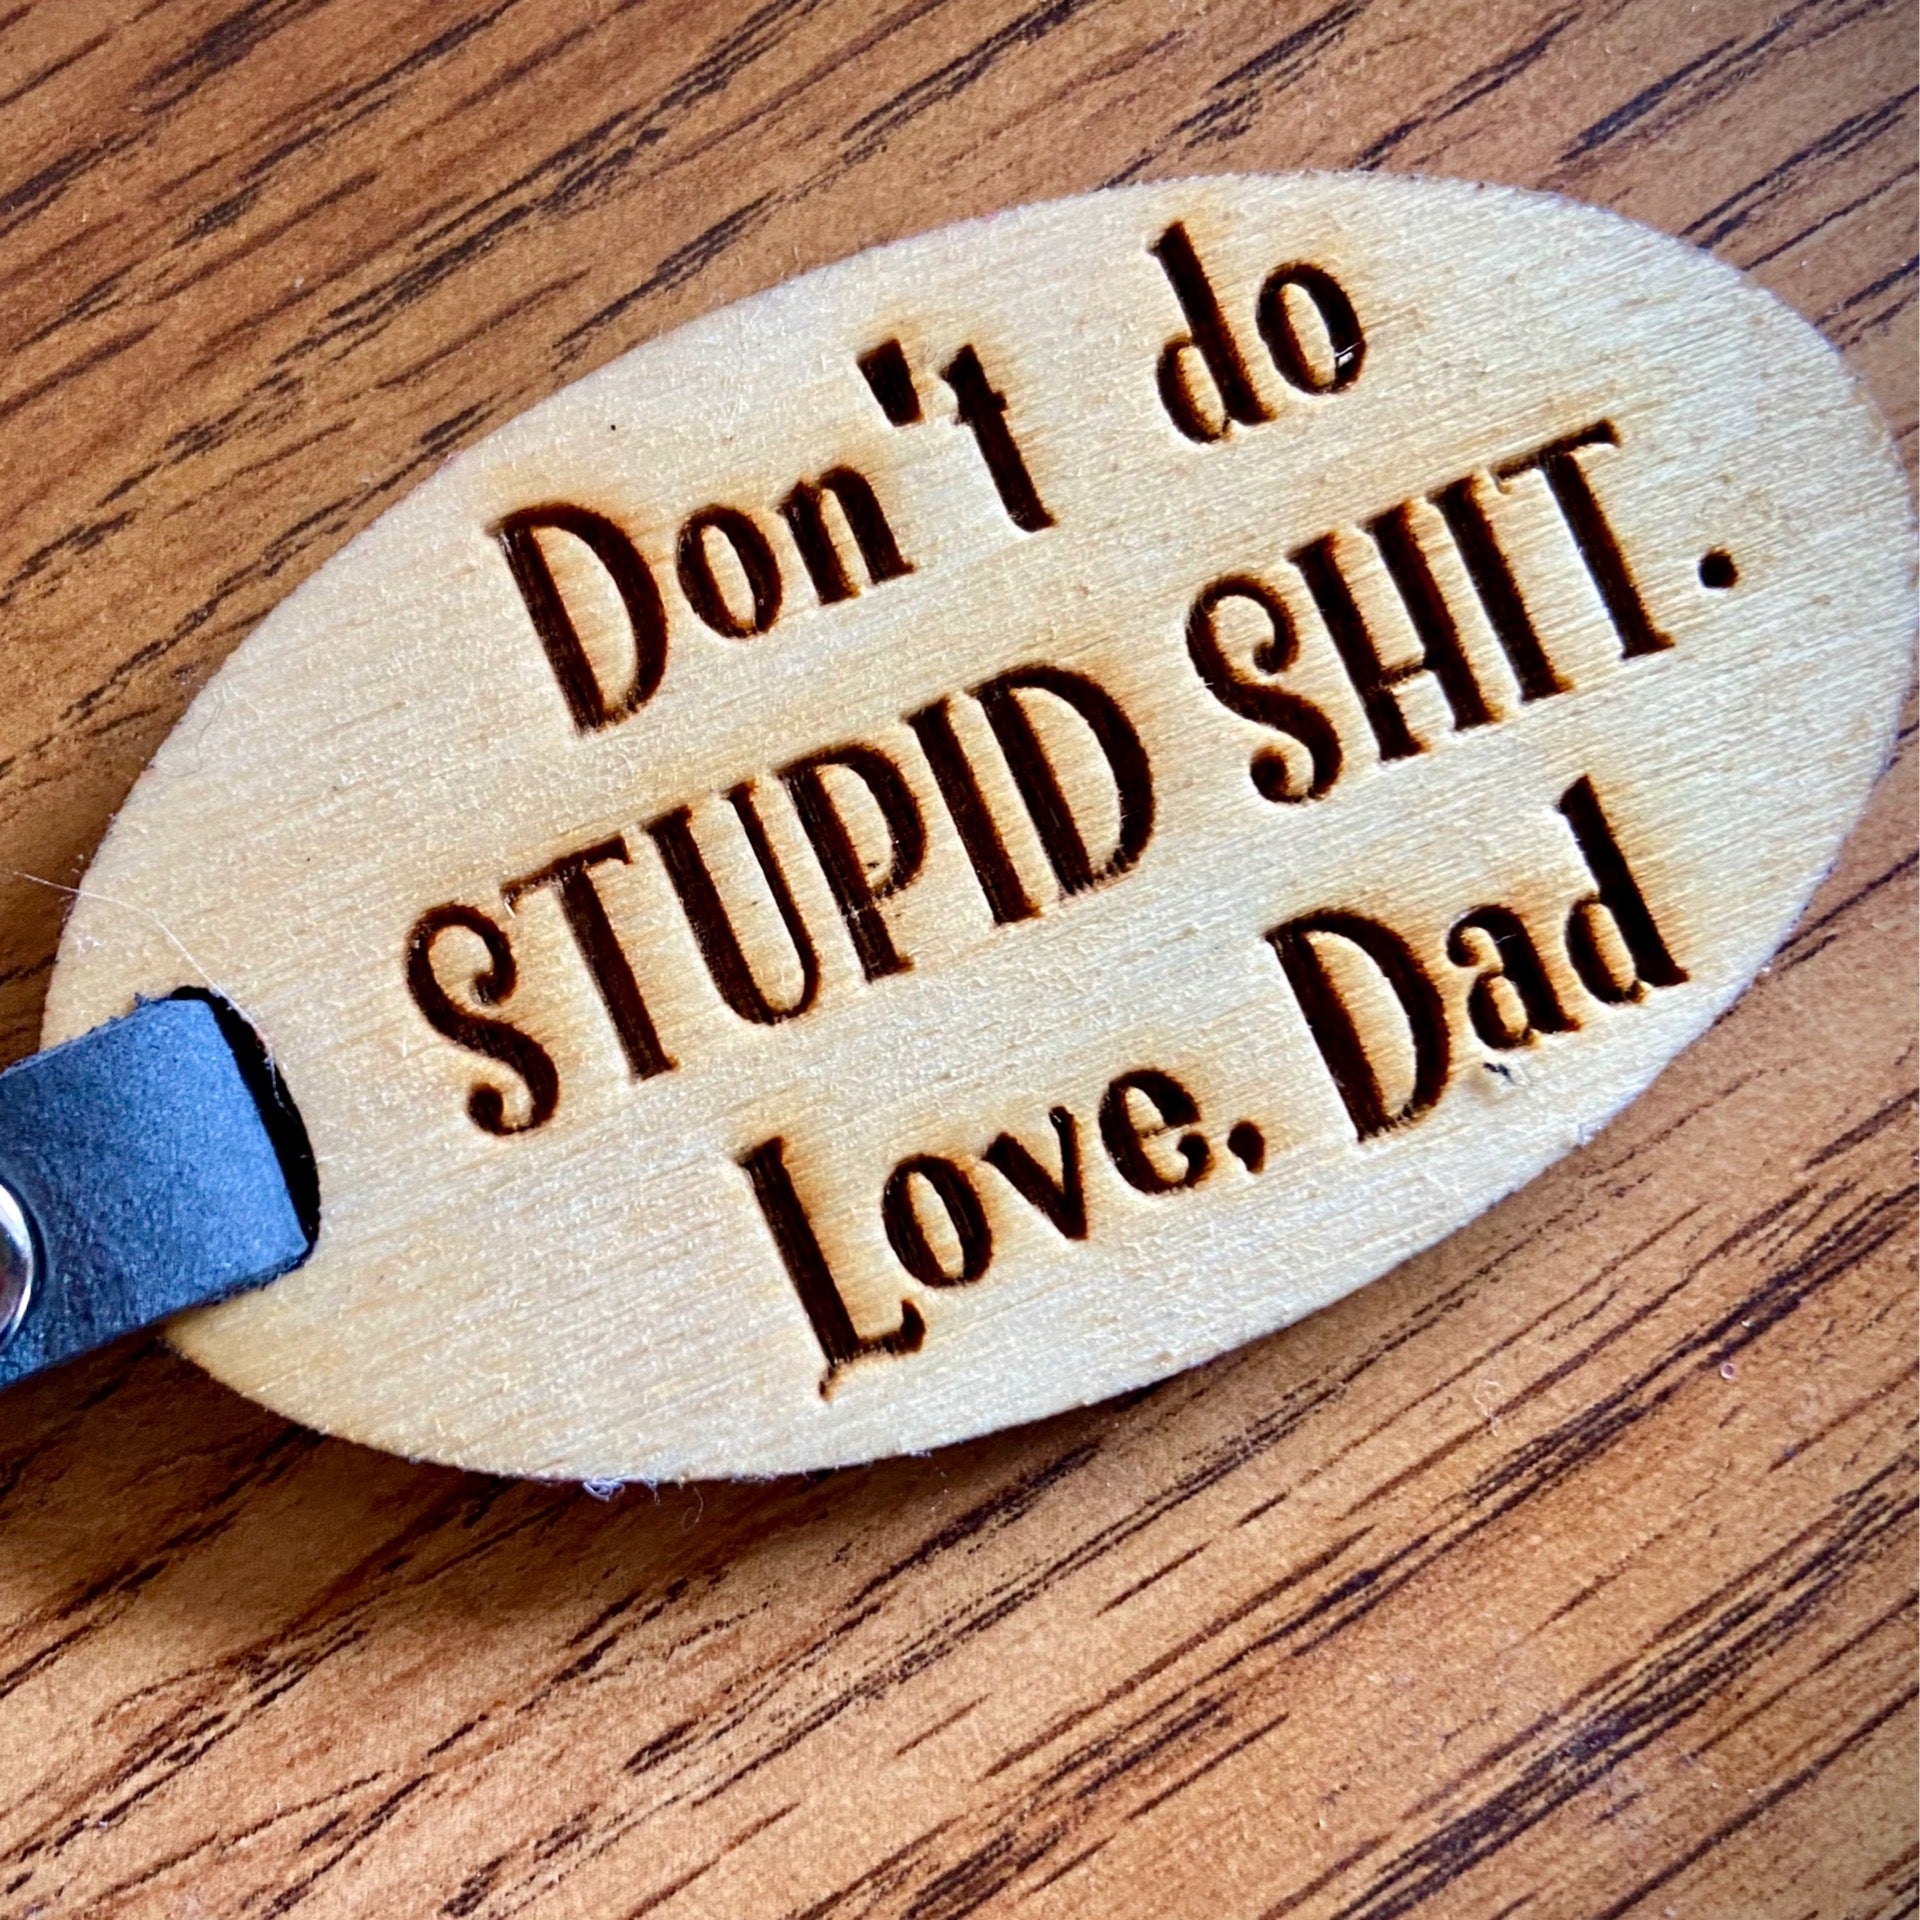 Don’t do stupid shit keychain love mom dad aunt sister grandma